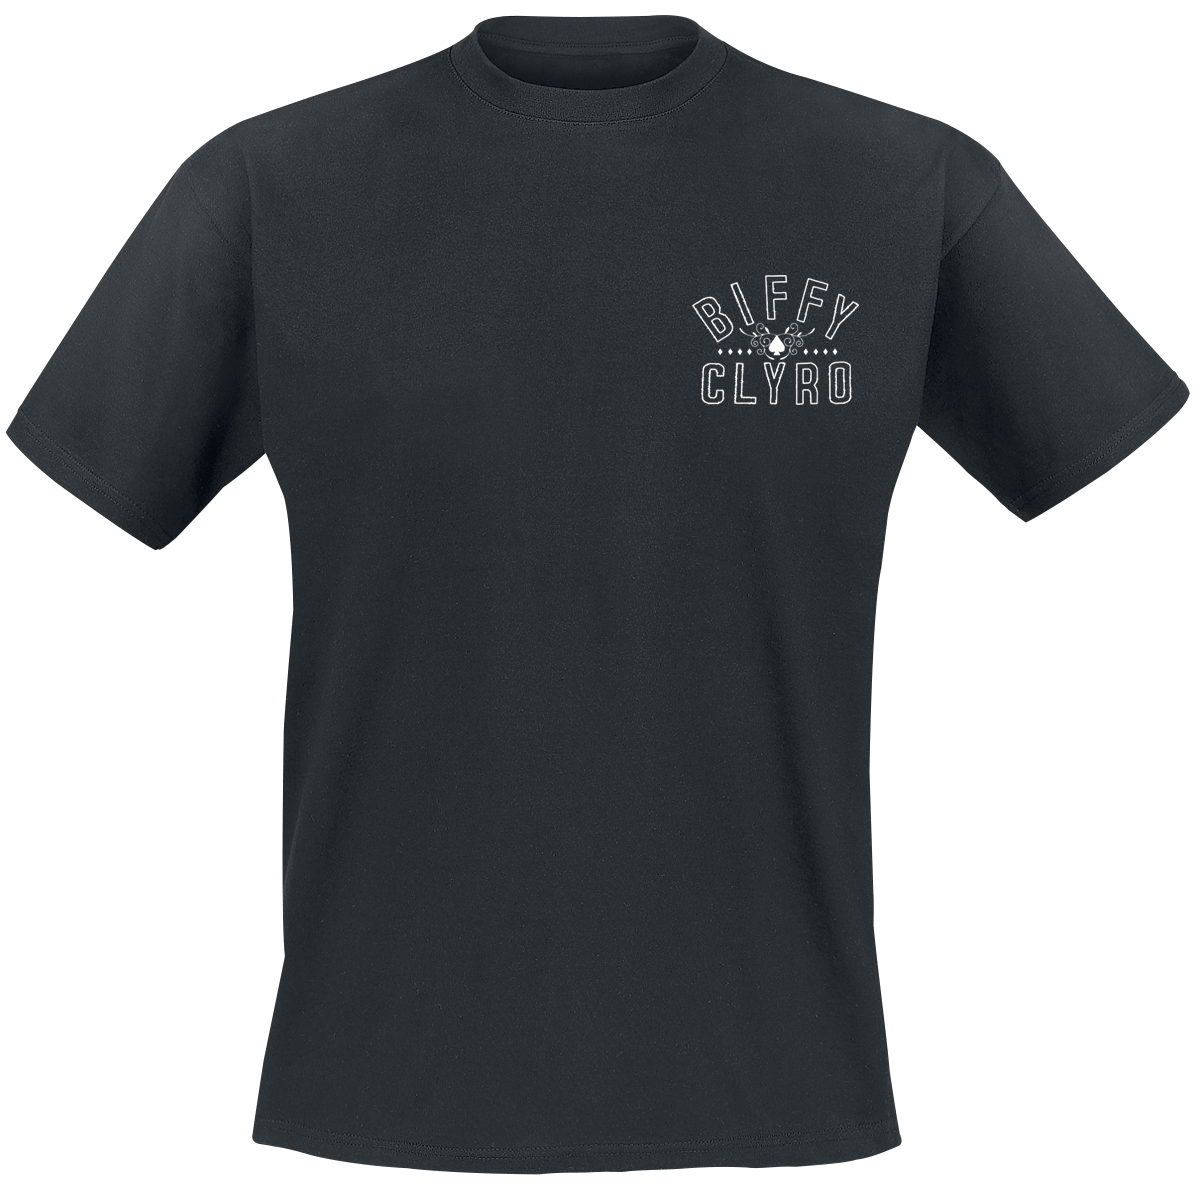 Biffy Clyro - Dolls - T-Shirt - black image